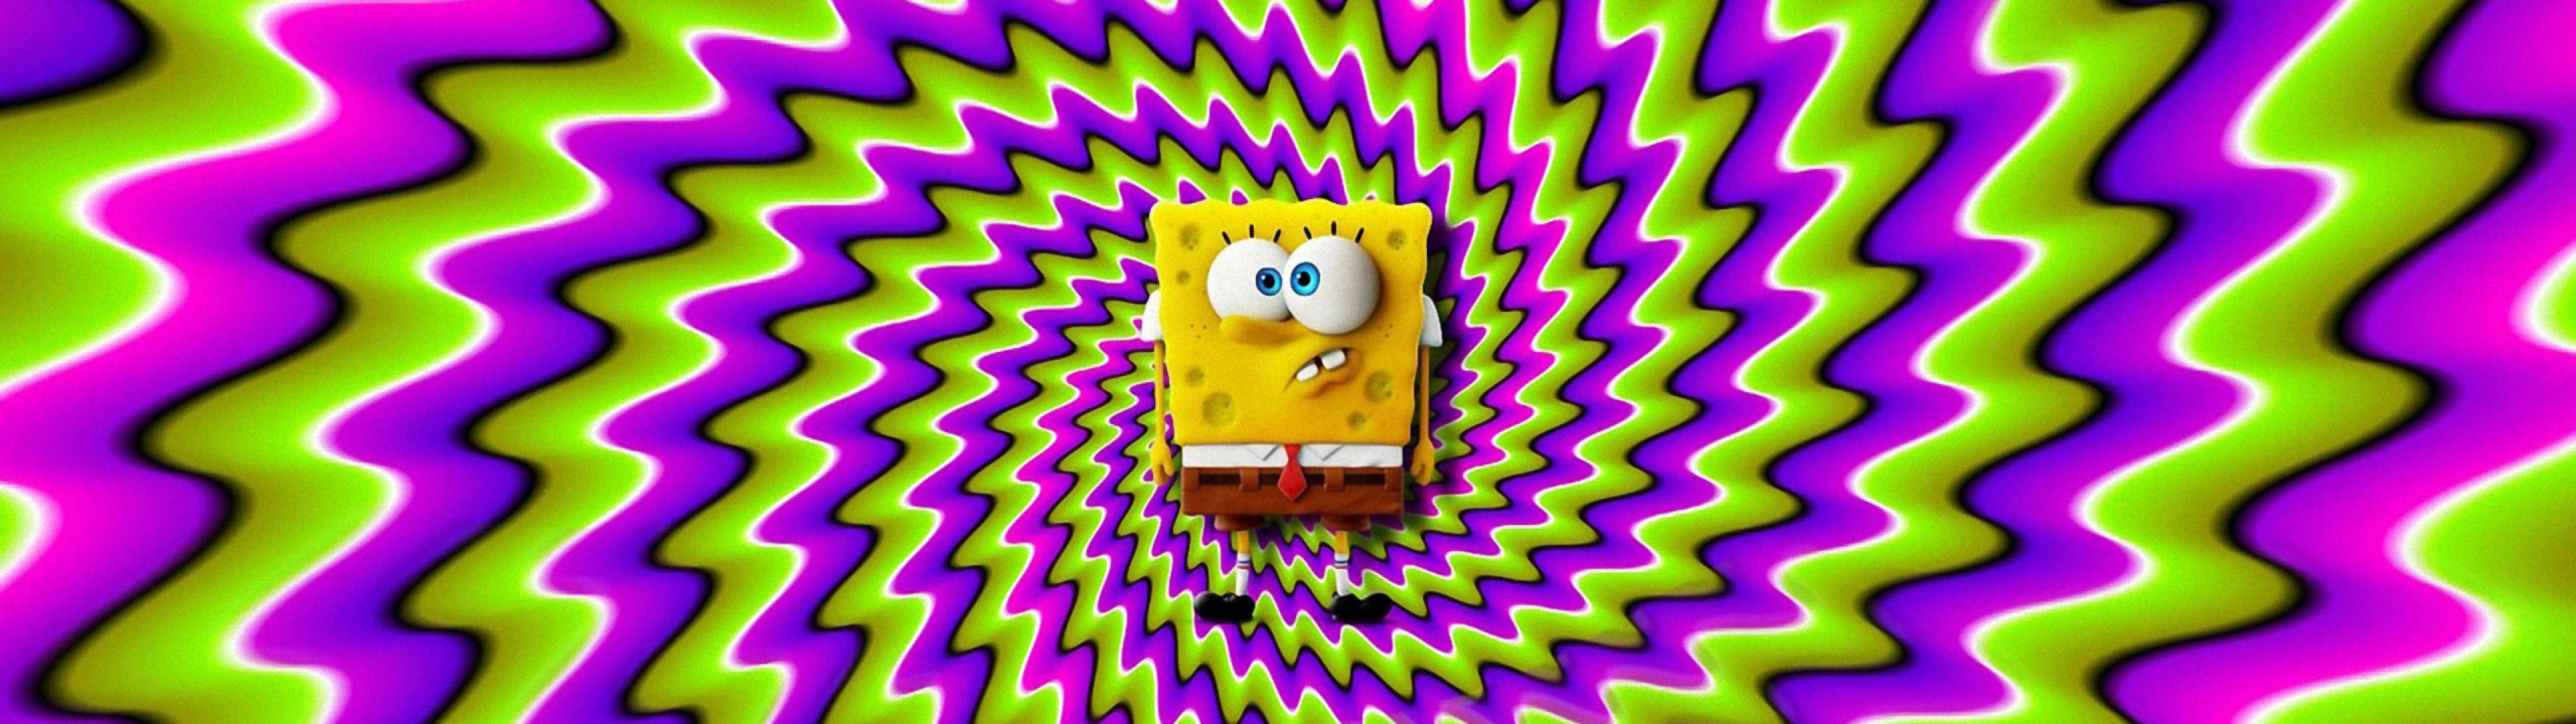 SPONGEBOB Sponge Out of Water family cartoon animation family wallpaper   2385x1541  522135  WallpaperUP